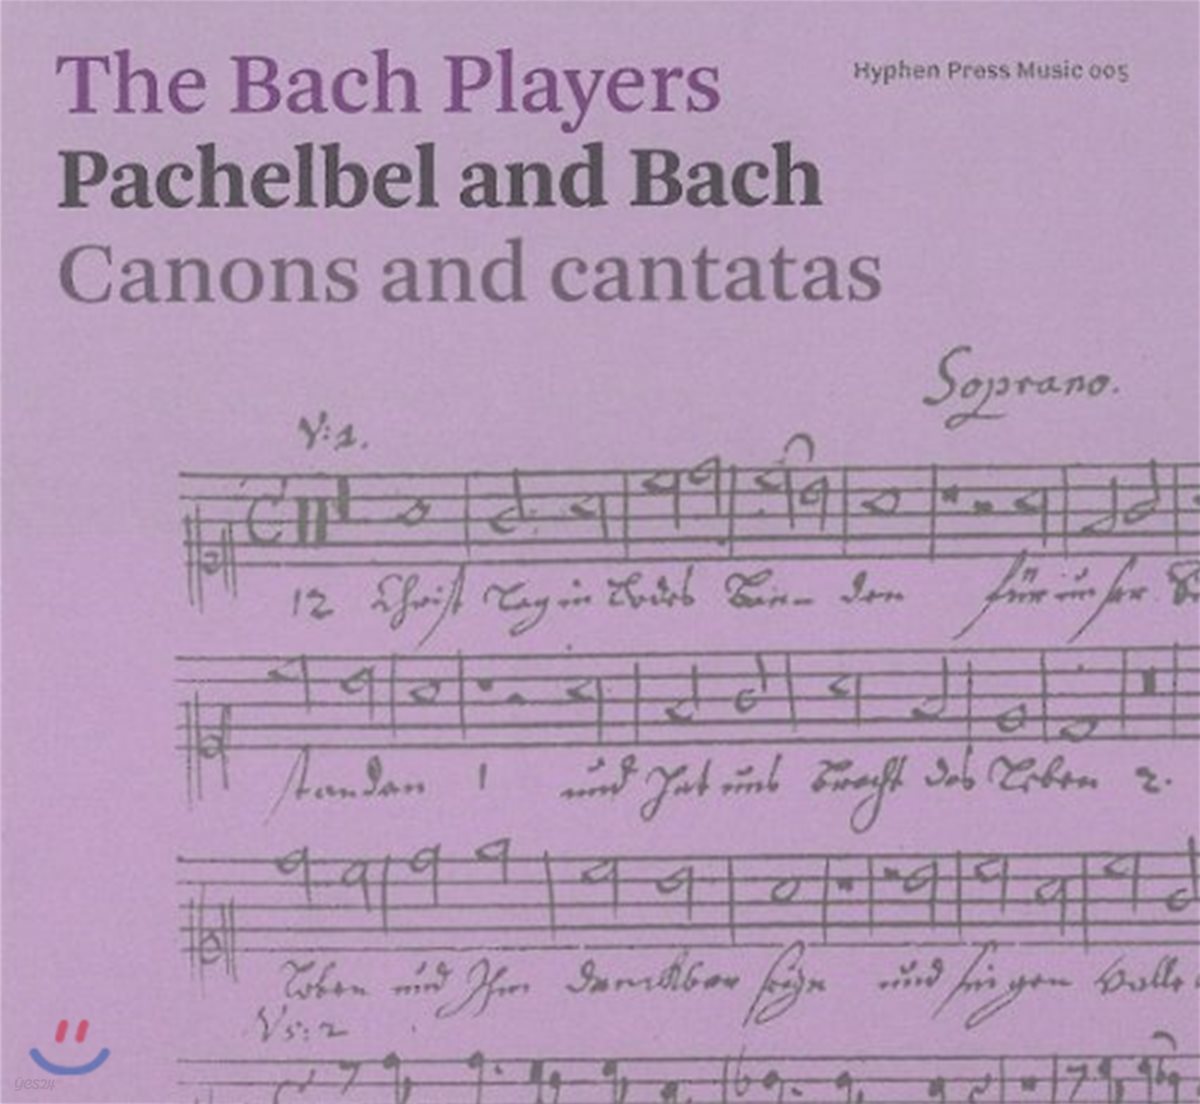 The Bach Players 파헬벨과 바흐: 캐논과 칸타타 - &#39;그리스도께서는 죽음의 포로가 되시어&#39; 외 (Pachelbel and Bach: Canons and Cantatas) 니콜레트 모넨, 바흐 플레이어즈